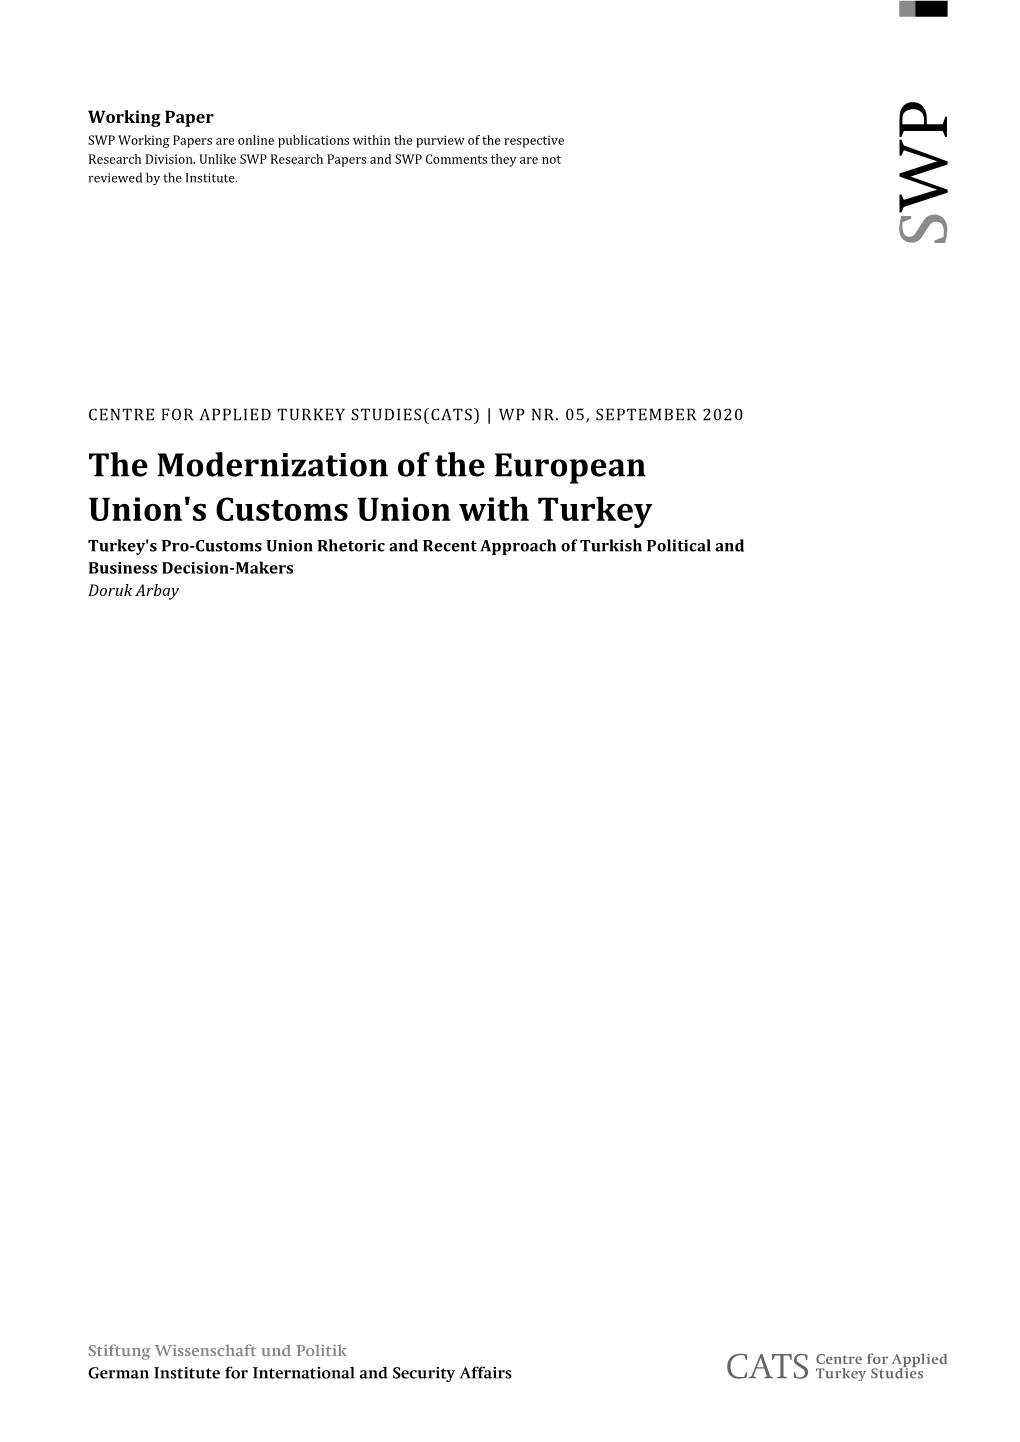 The Modernization of the European Union's Customs Union with Turkey